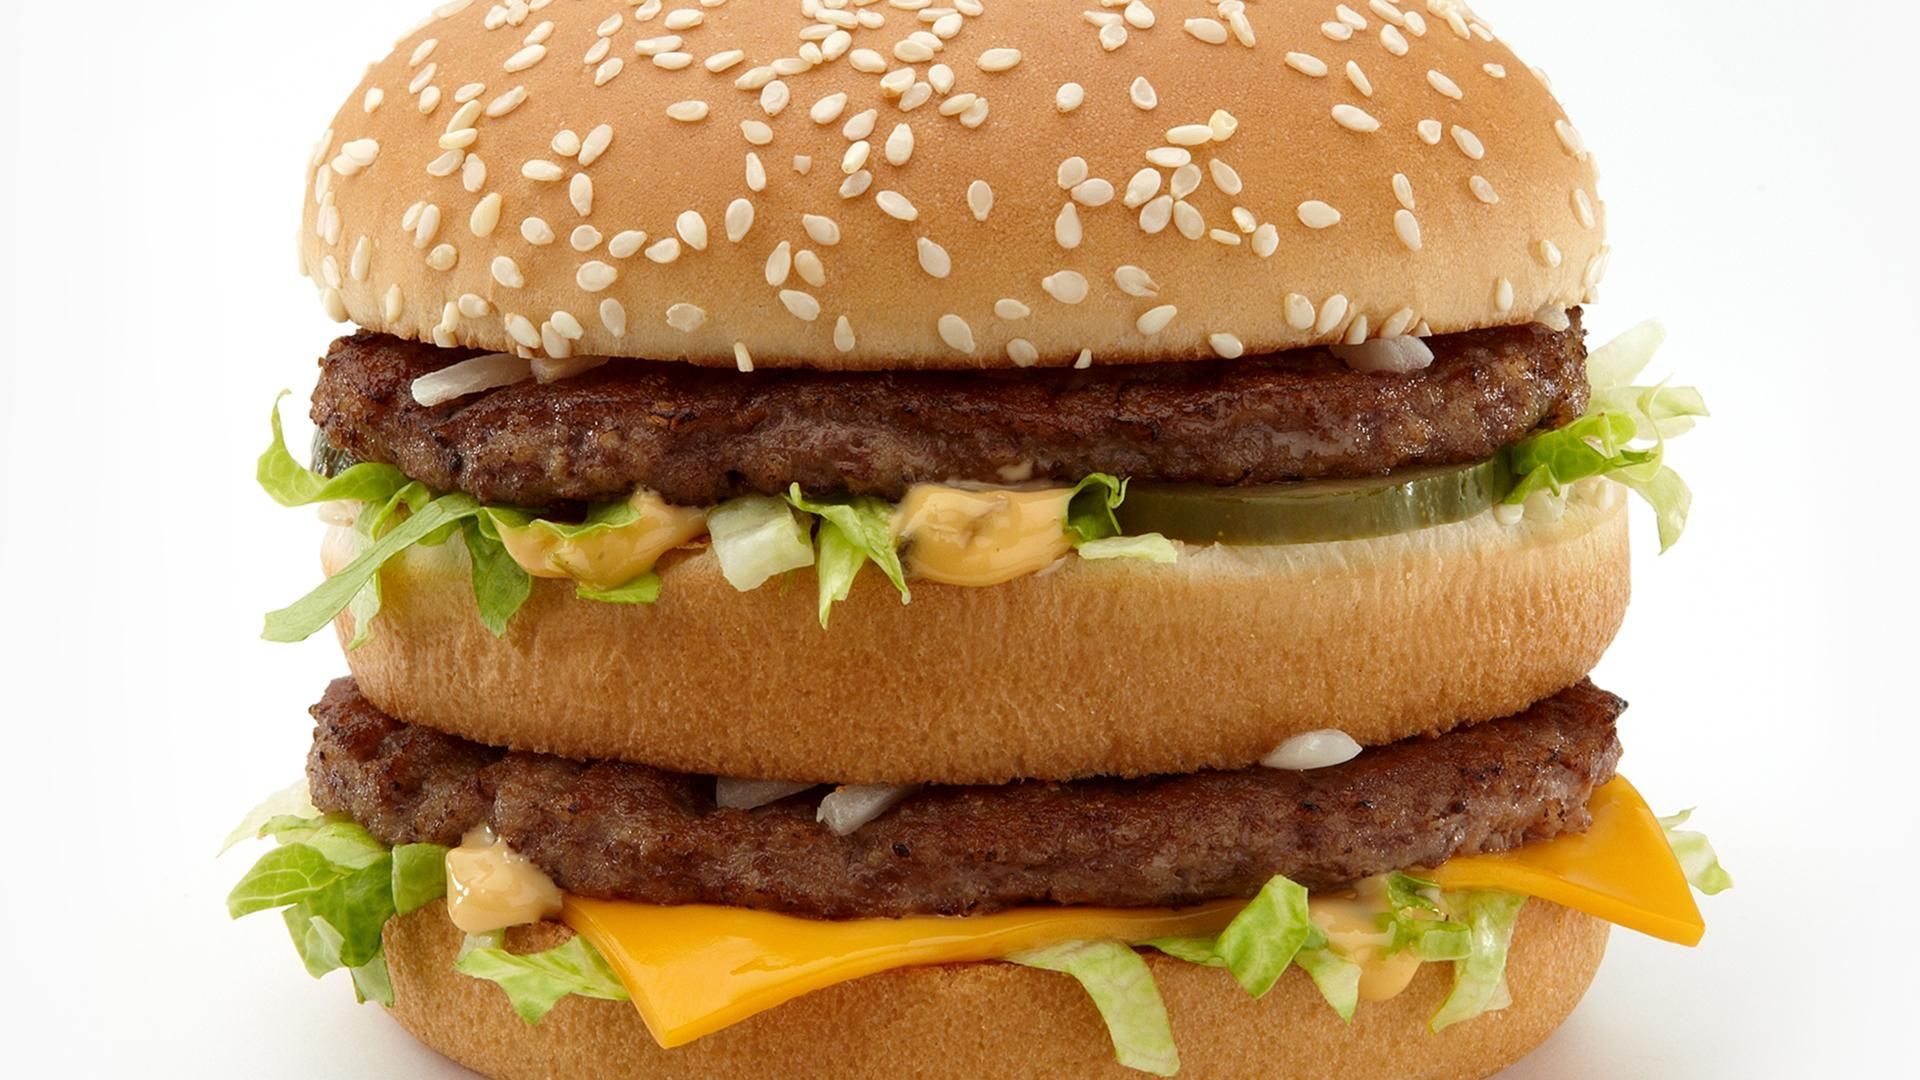 McDonalds Premium Burger or Chicken Sandwich for $1 #mcd